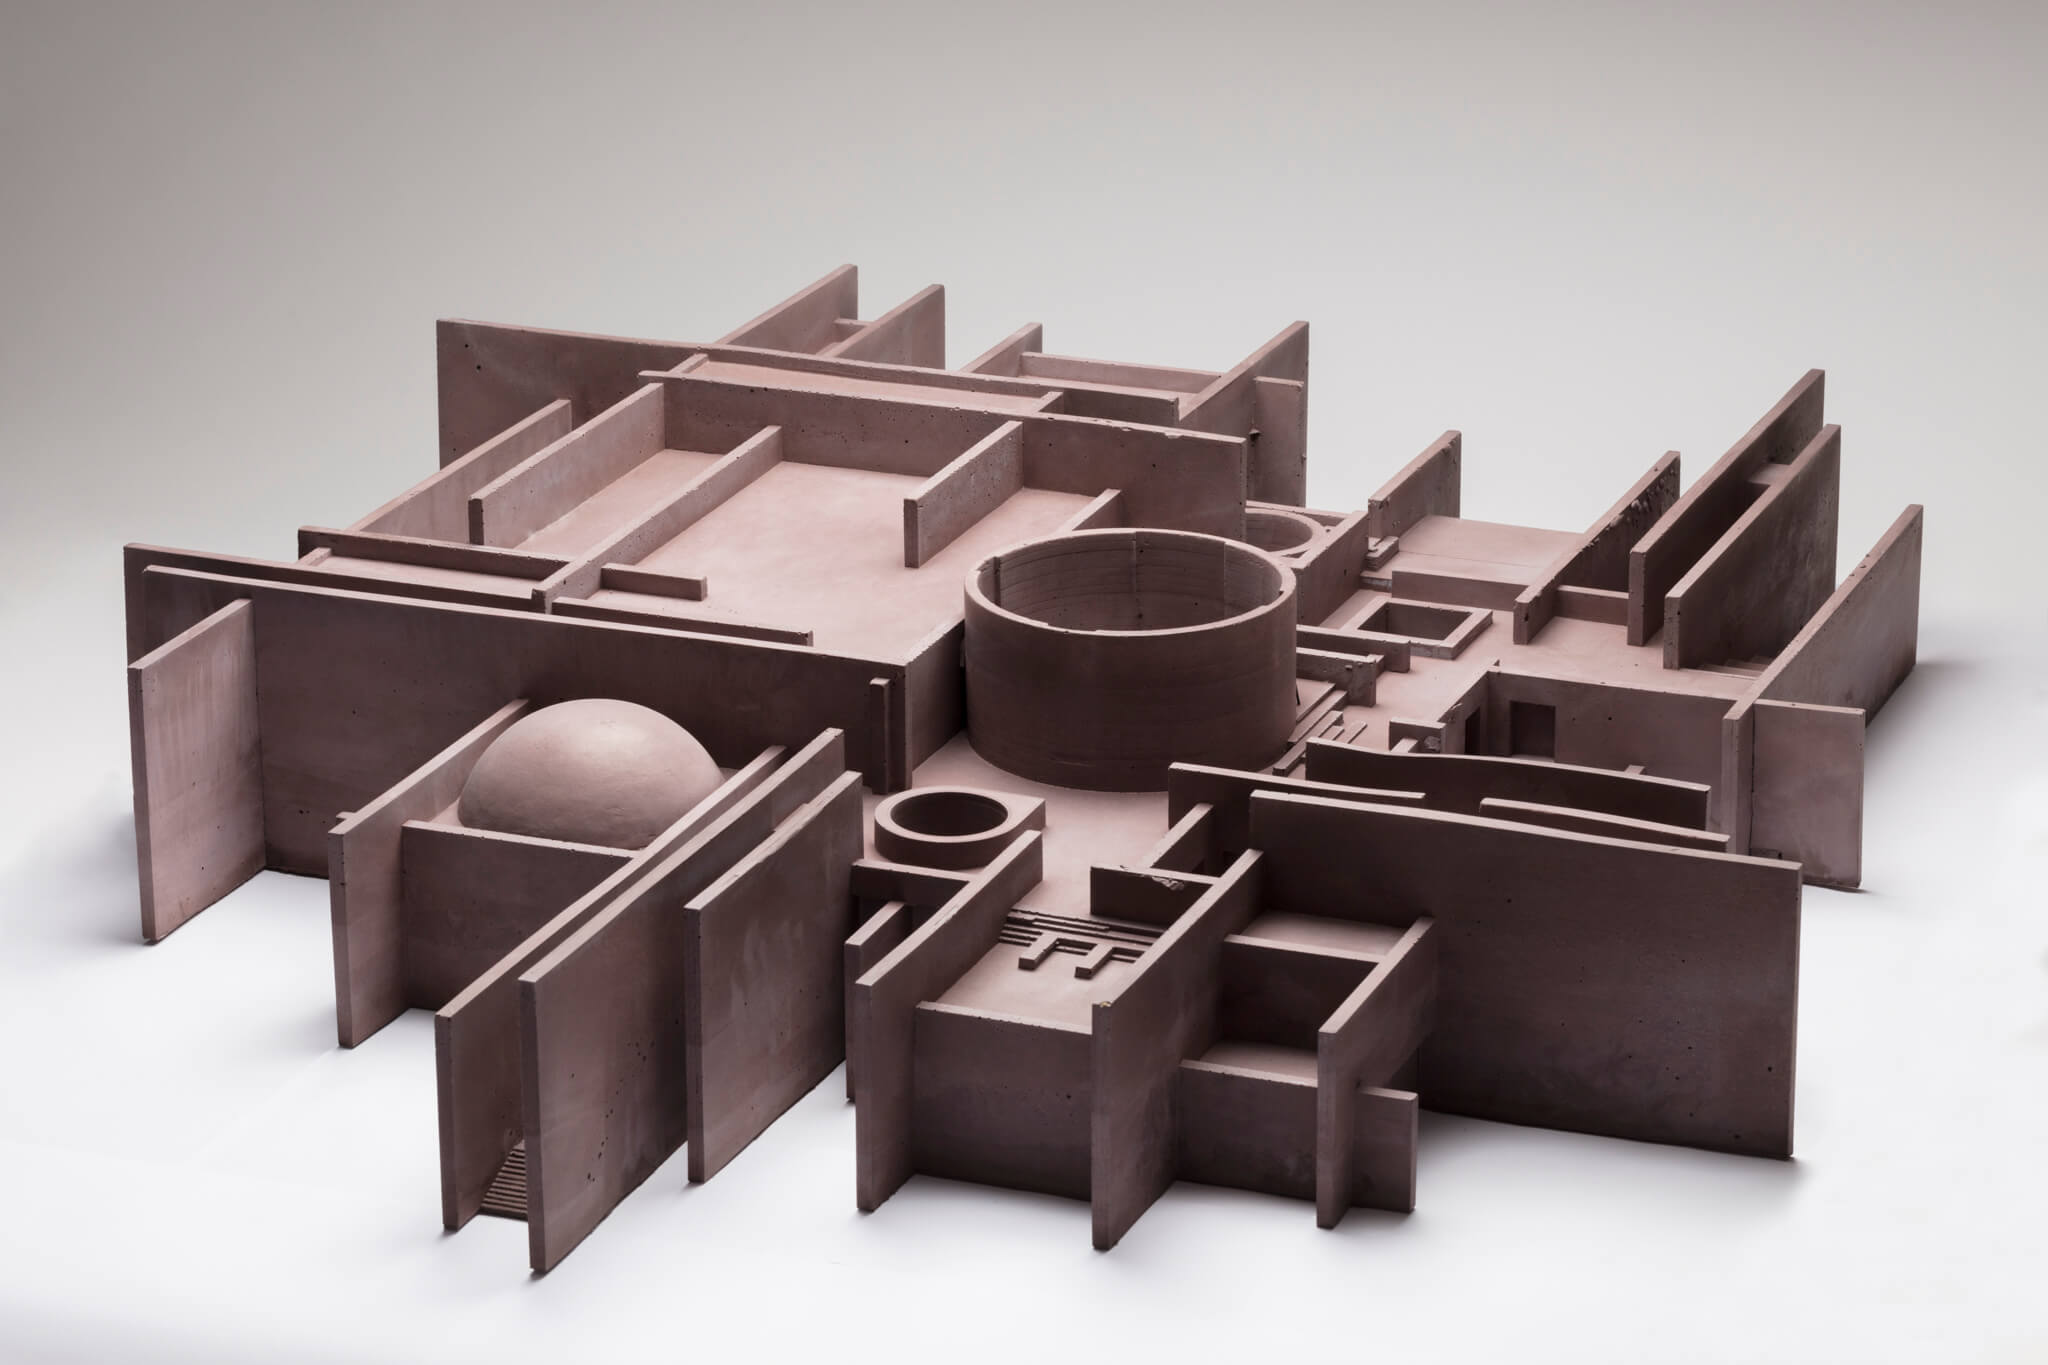 A flat model of a brown research center from tatiana bilbao estudio